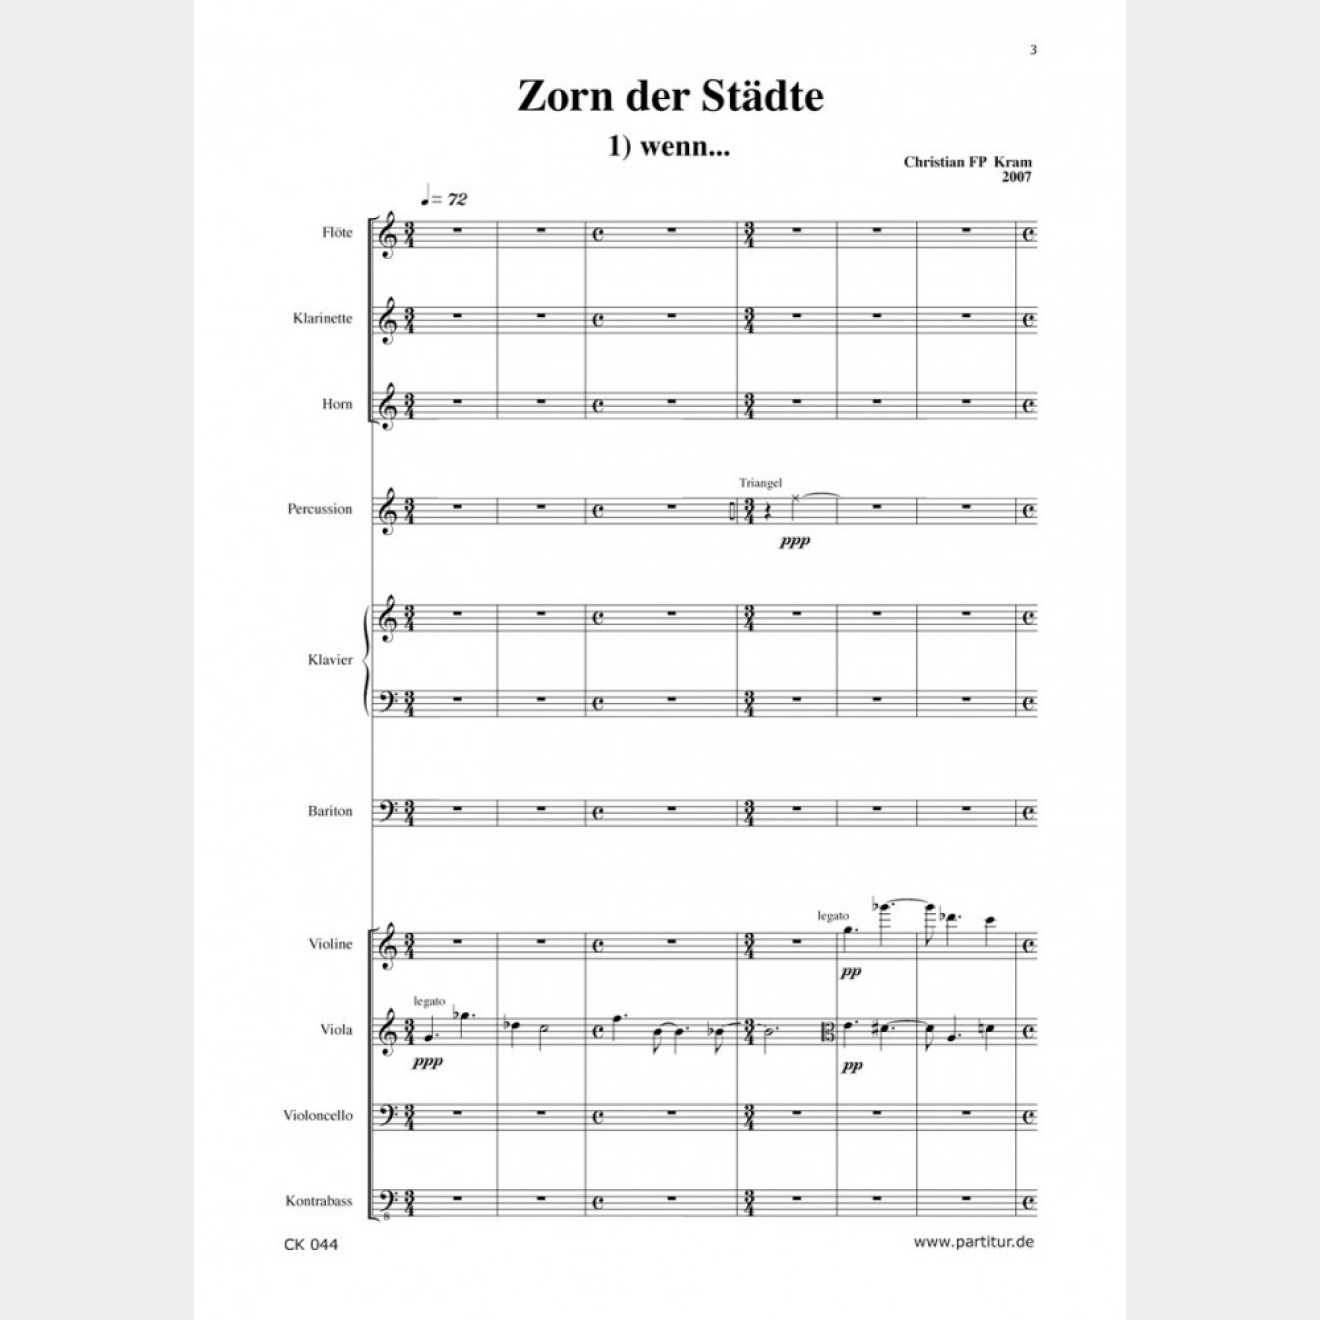 Zorn Kram, Christian FP: Zorn der Städte - 5 songs (poems by Laszlo Csiba), 22`